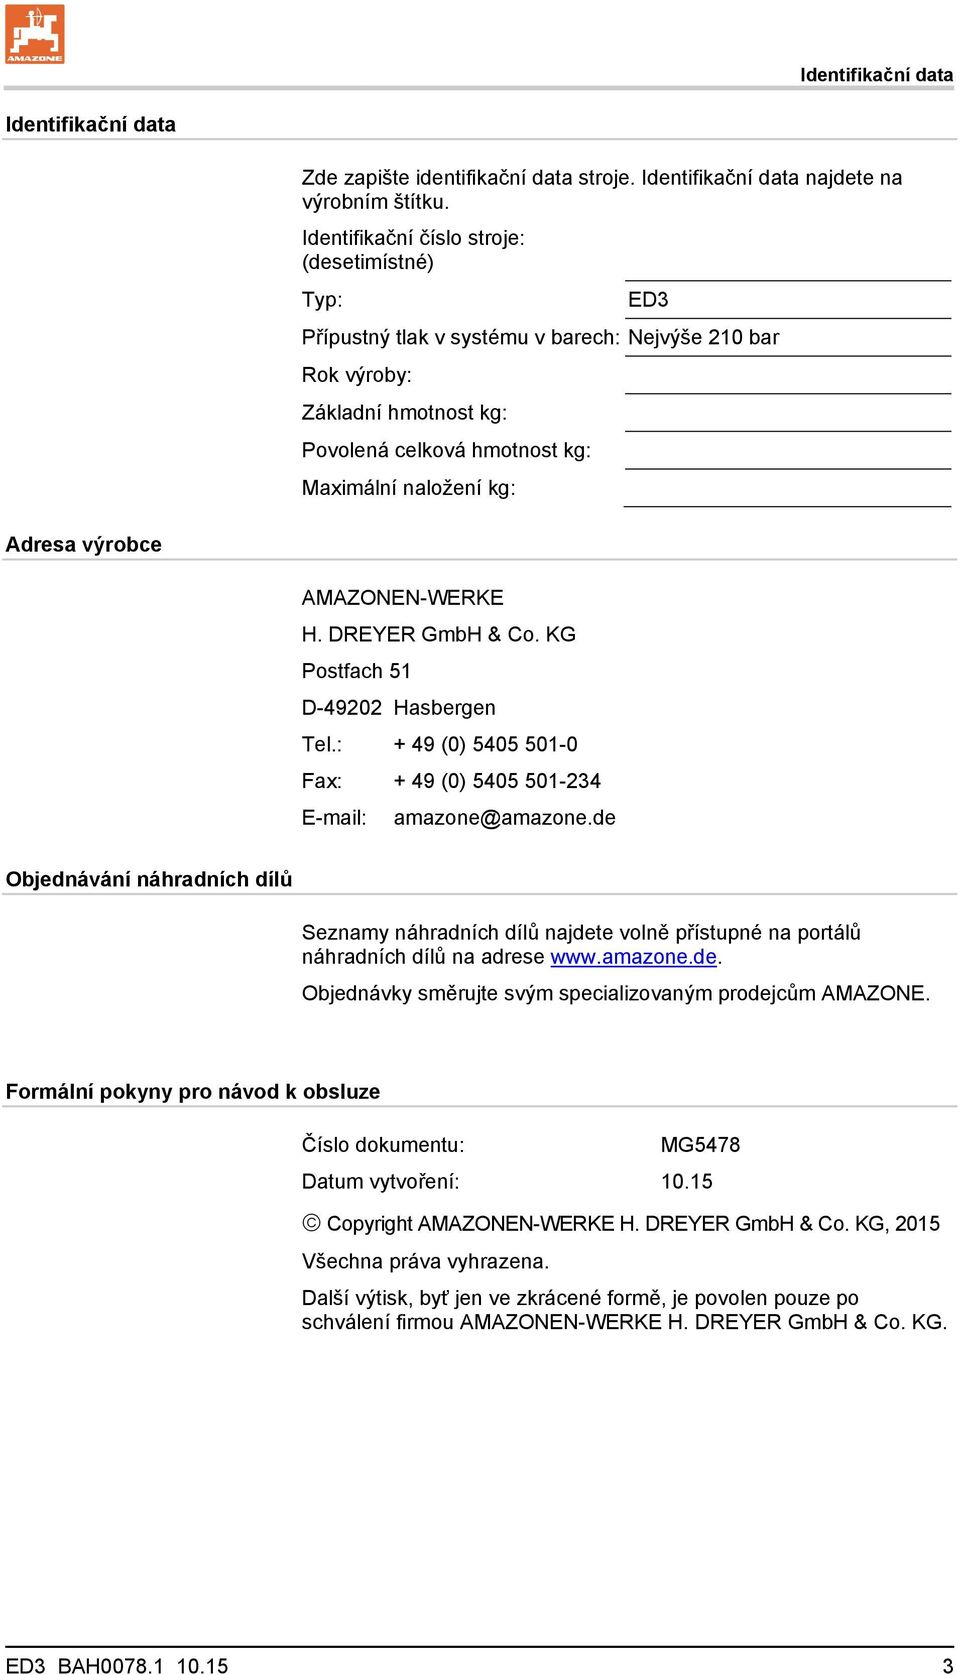 výrobce AMAZONEN-WERKE H. DREYER GmbH & Co. KG Postfach 51 D-49202 Hasbergen Tel.: + 49 (0) 5405 501-0 Fax: + 49 (0) 5405 501-234 E-mail: amazone@amazone.